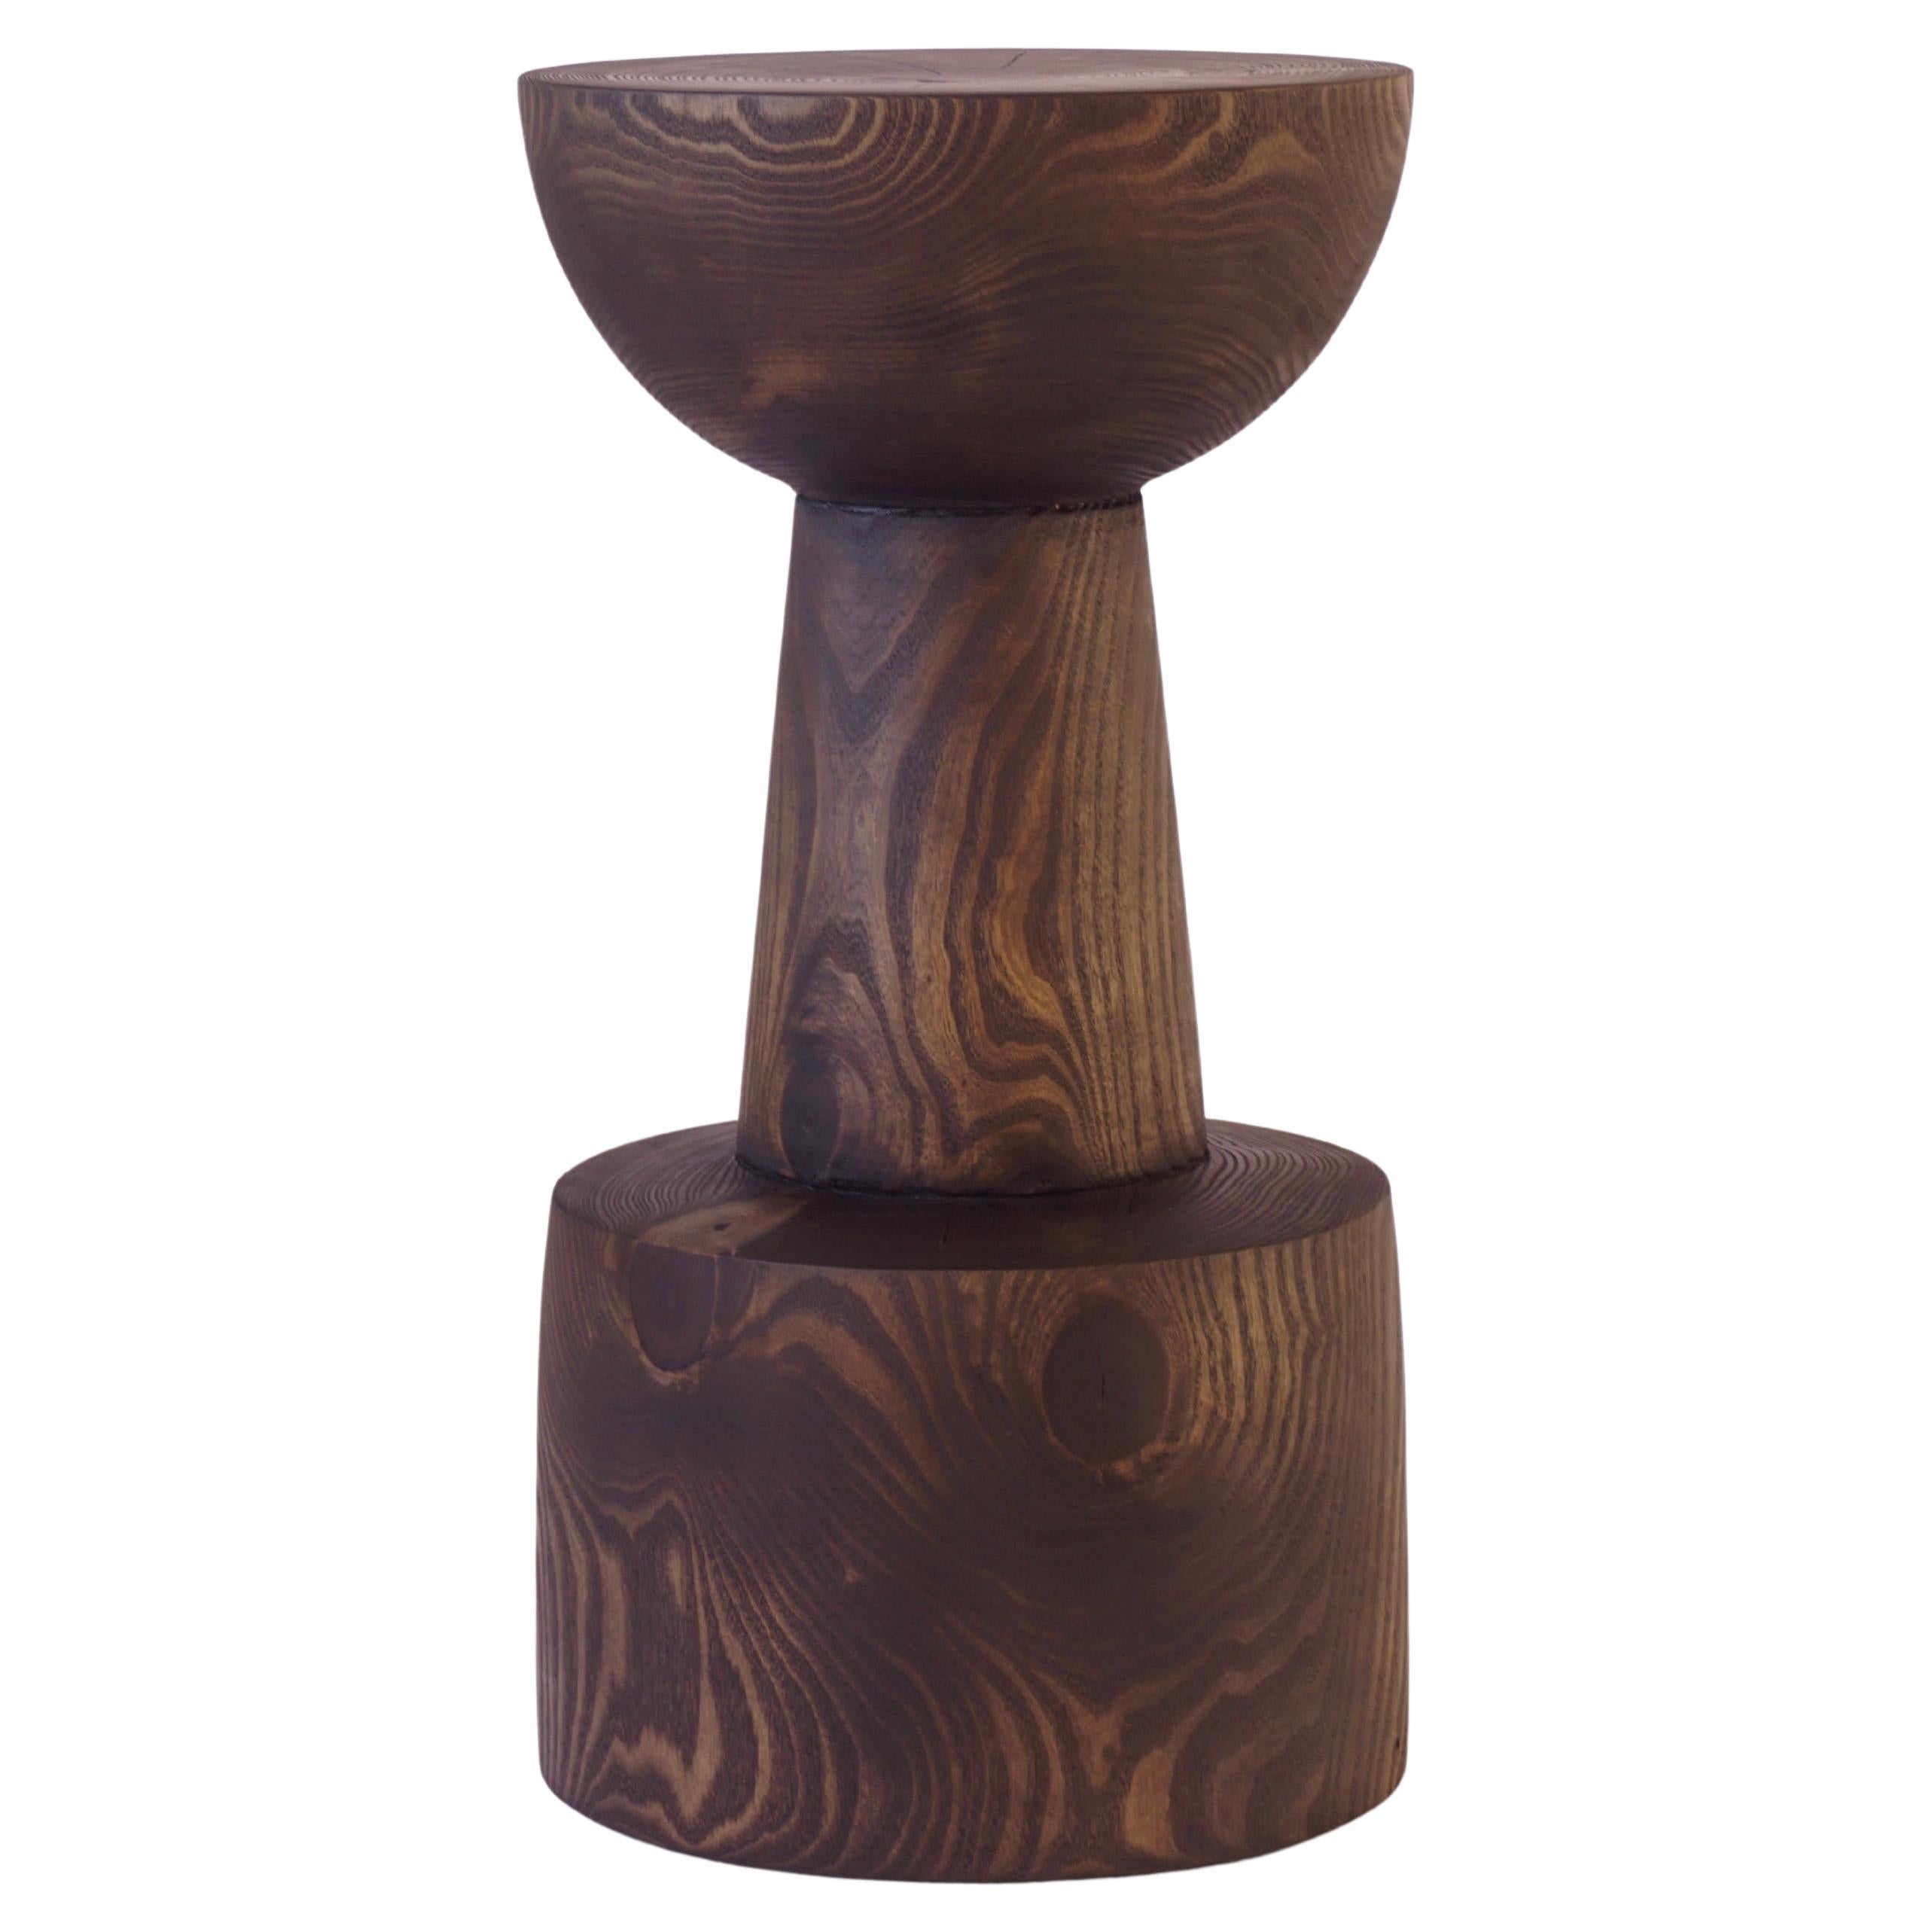 Turned Wooden Pedestal Table #6 in Ebonized Catalpa For Sale